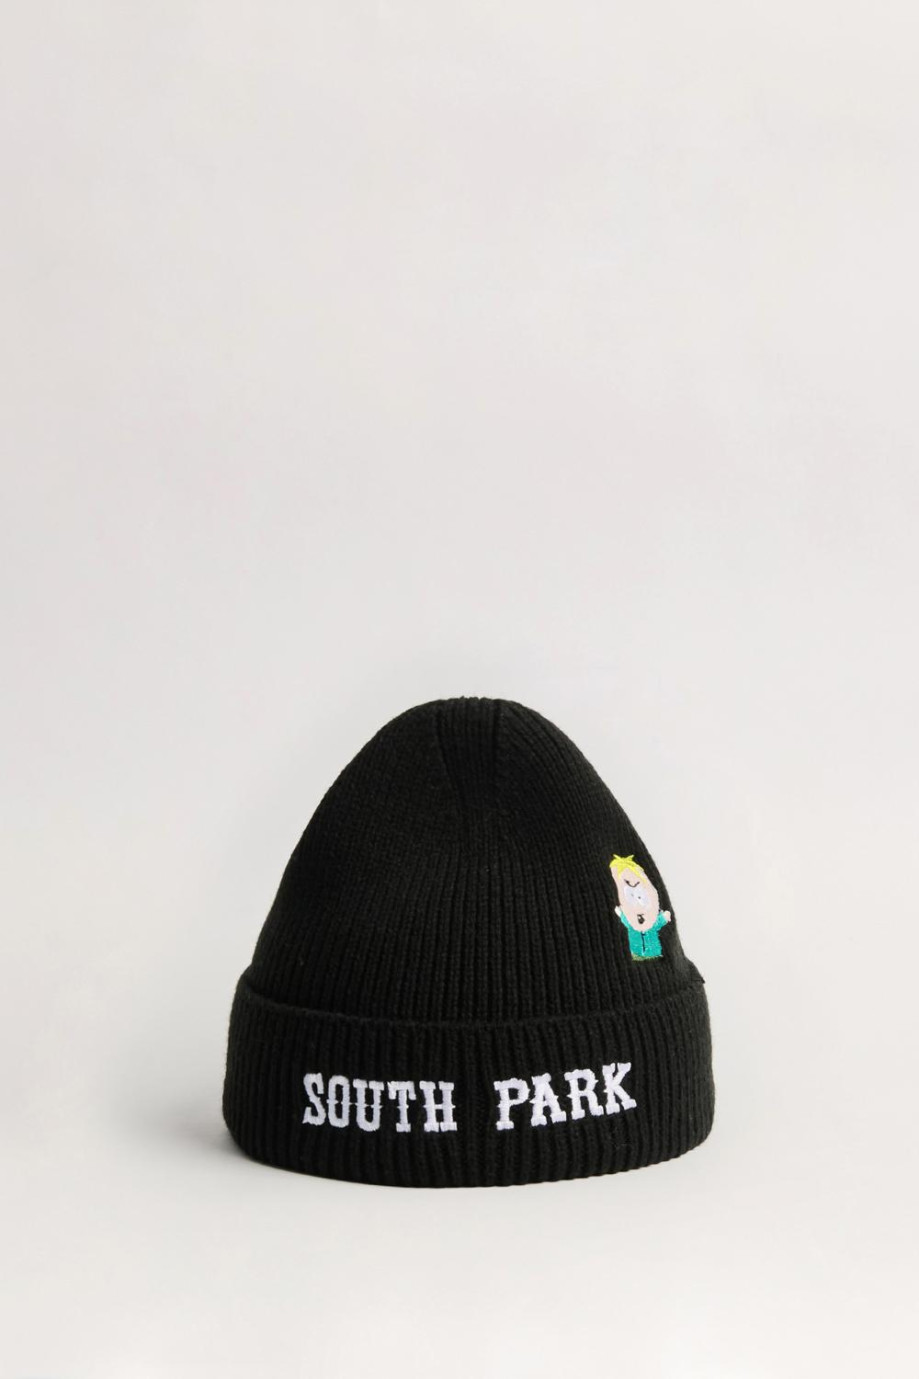 Gorro tejido negro con diseño de South Park bordado